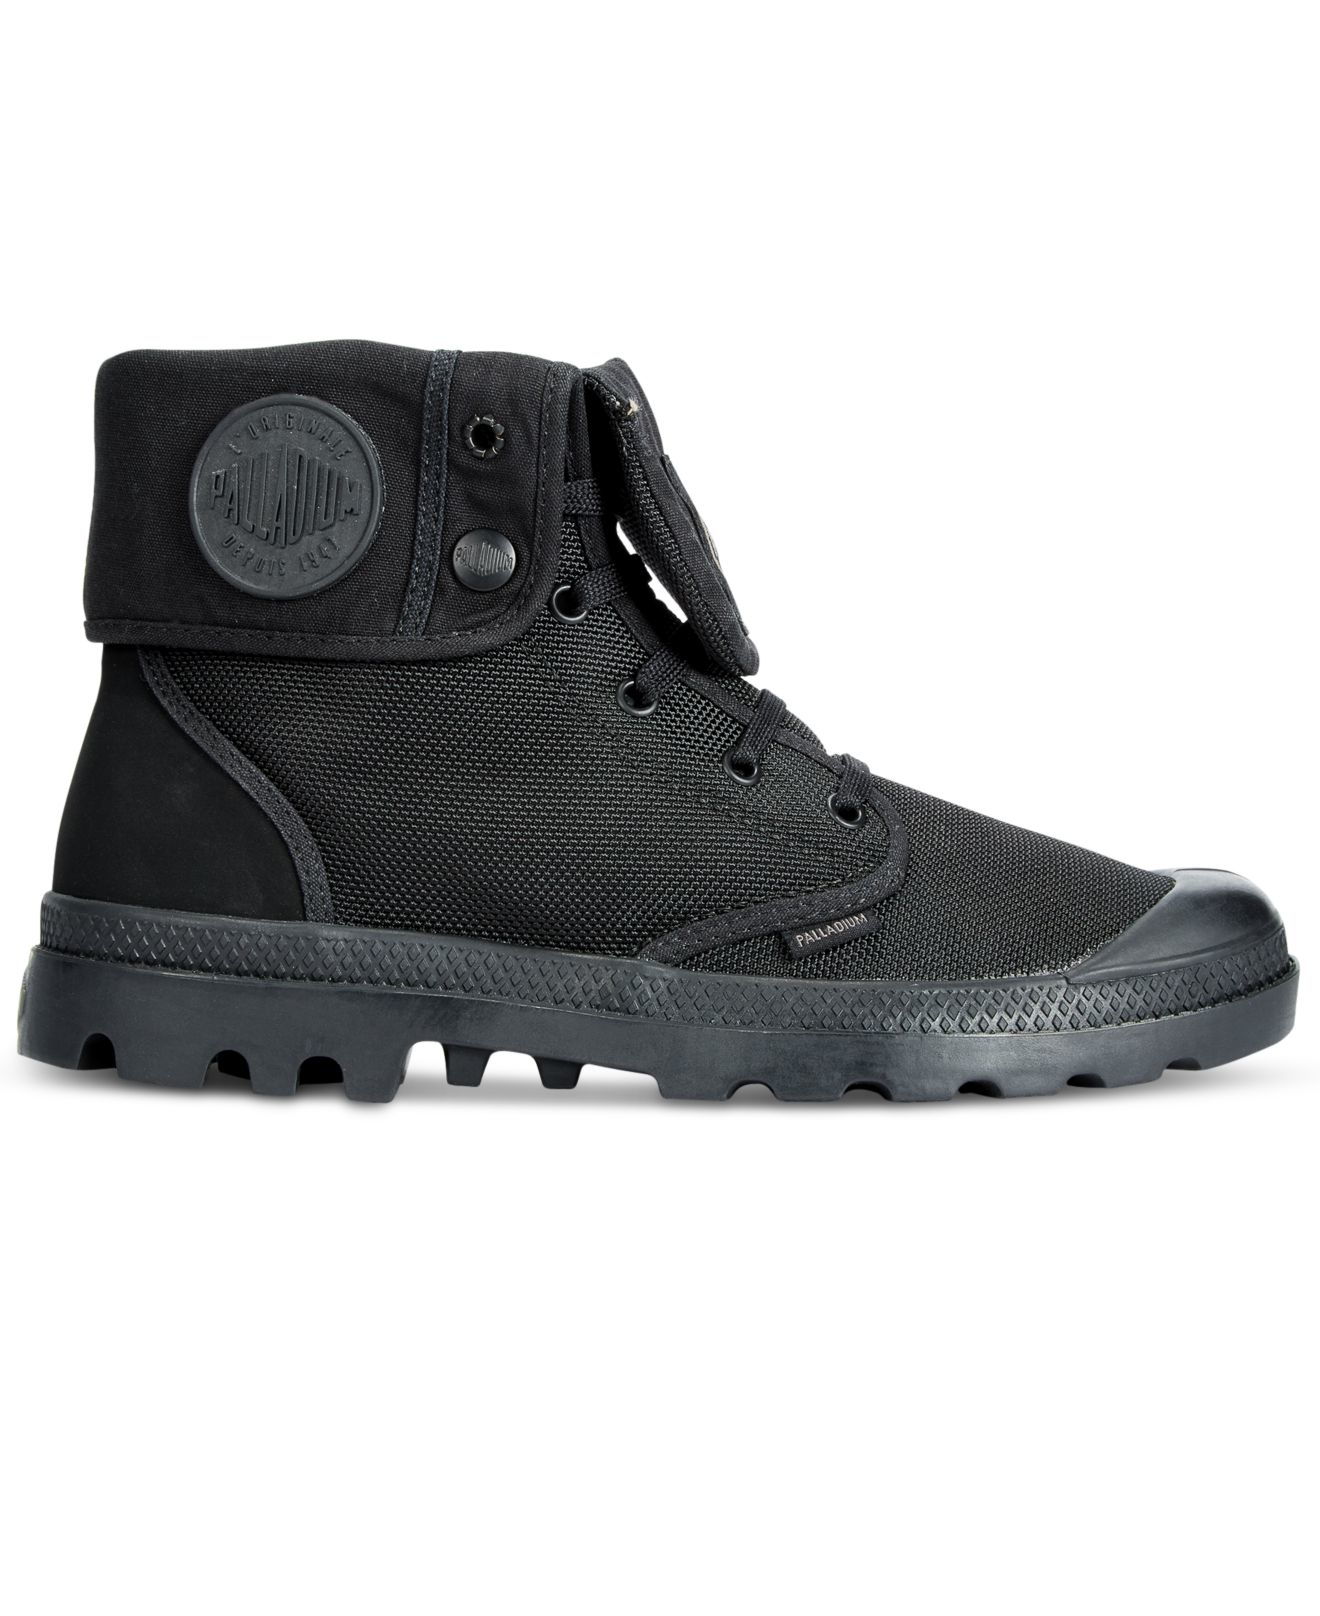 Lyst - Palladium Monochrome Baggy Ii Boots in Black for Men